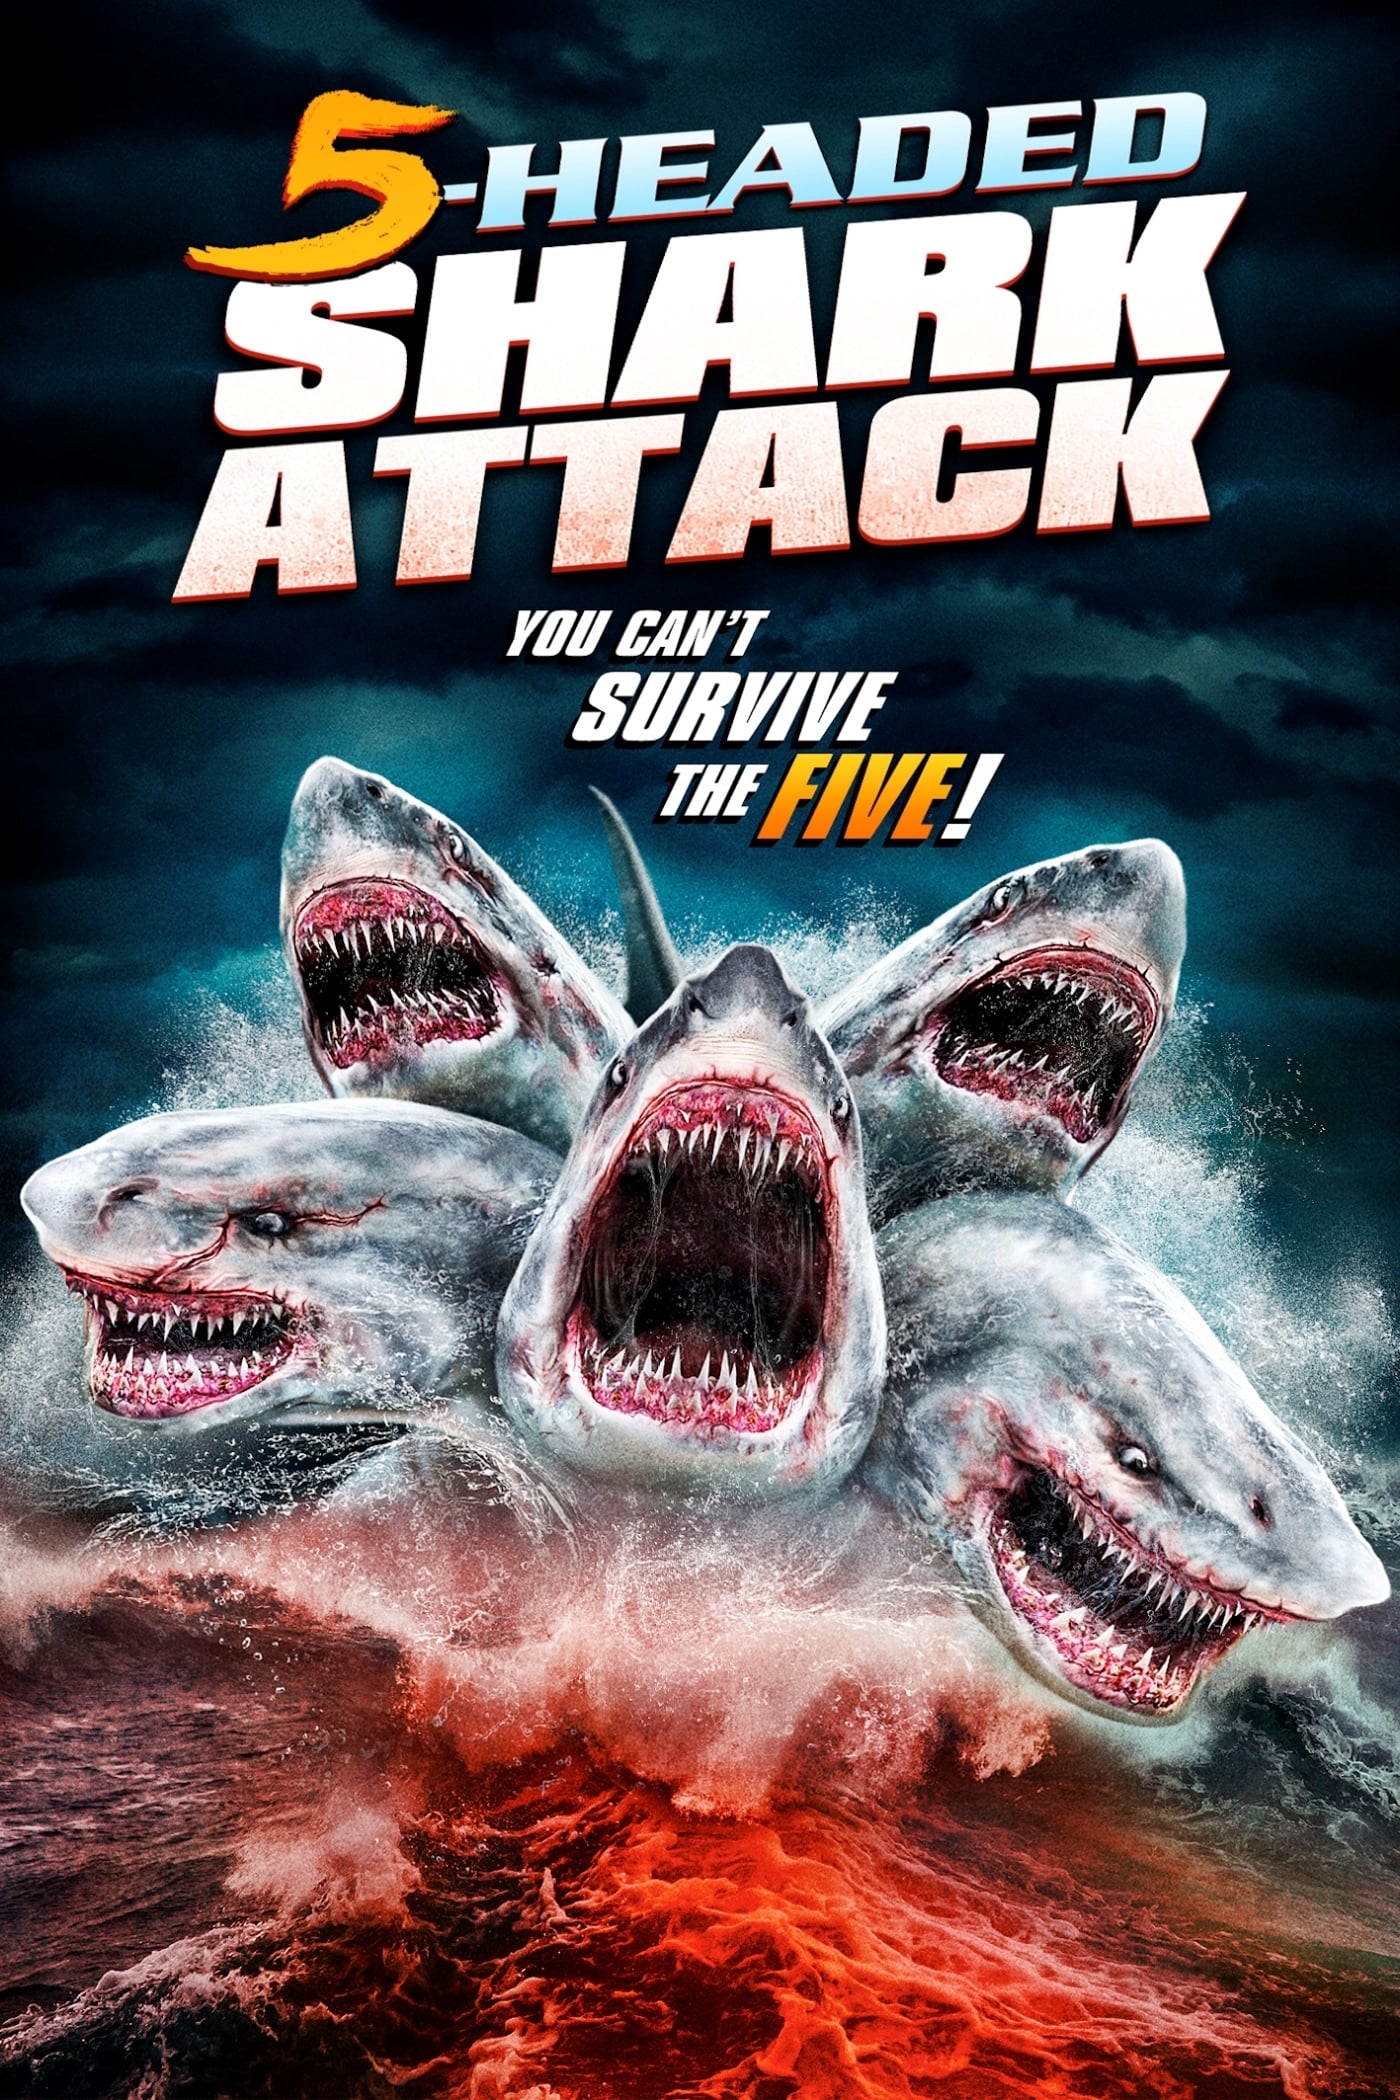 Нападение шестиглавой. Нападение пятиглавой акулы / 5 headed Shark Attack (2017). Атака МЕГАЛОДОНА.